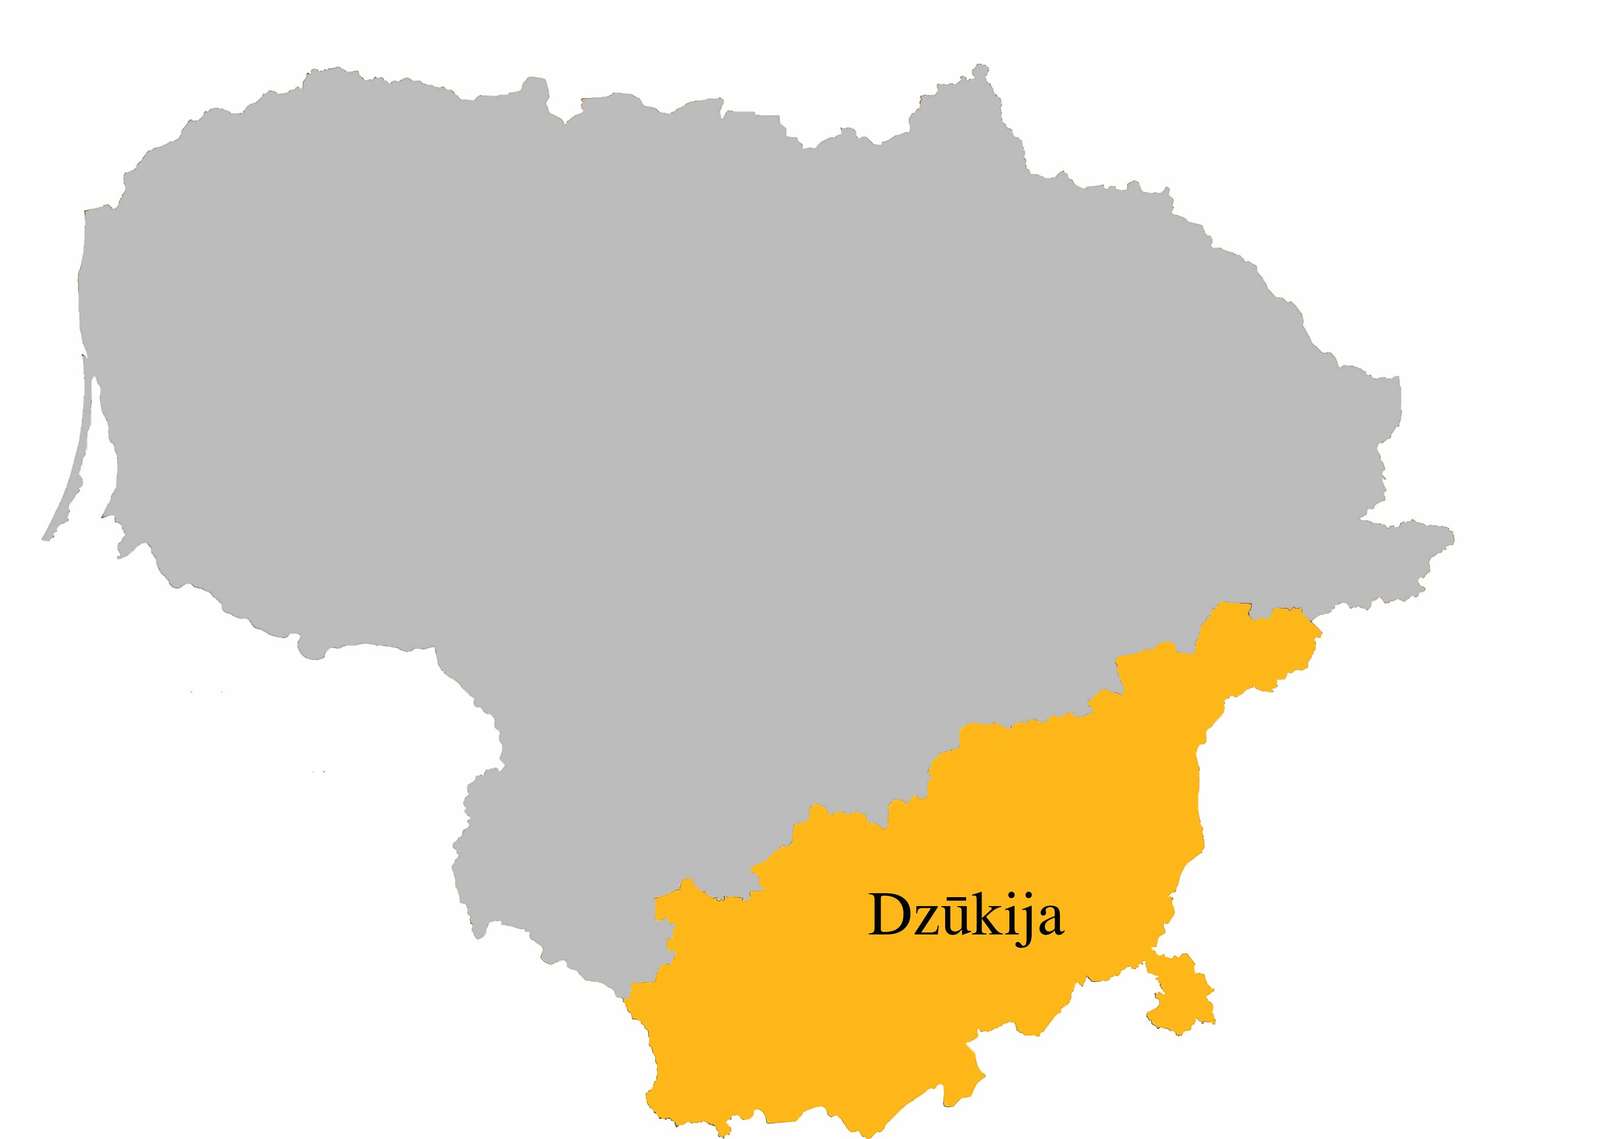 Dzūkija regionales rompecabezas en línea